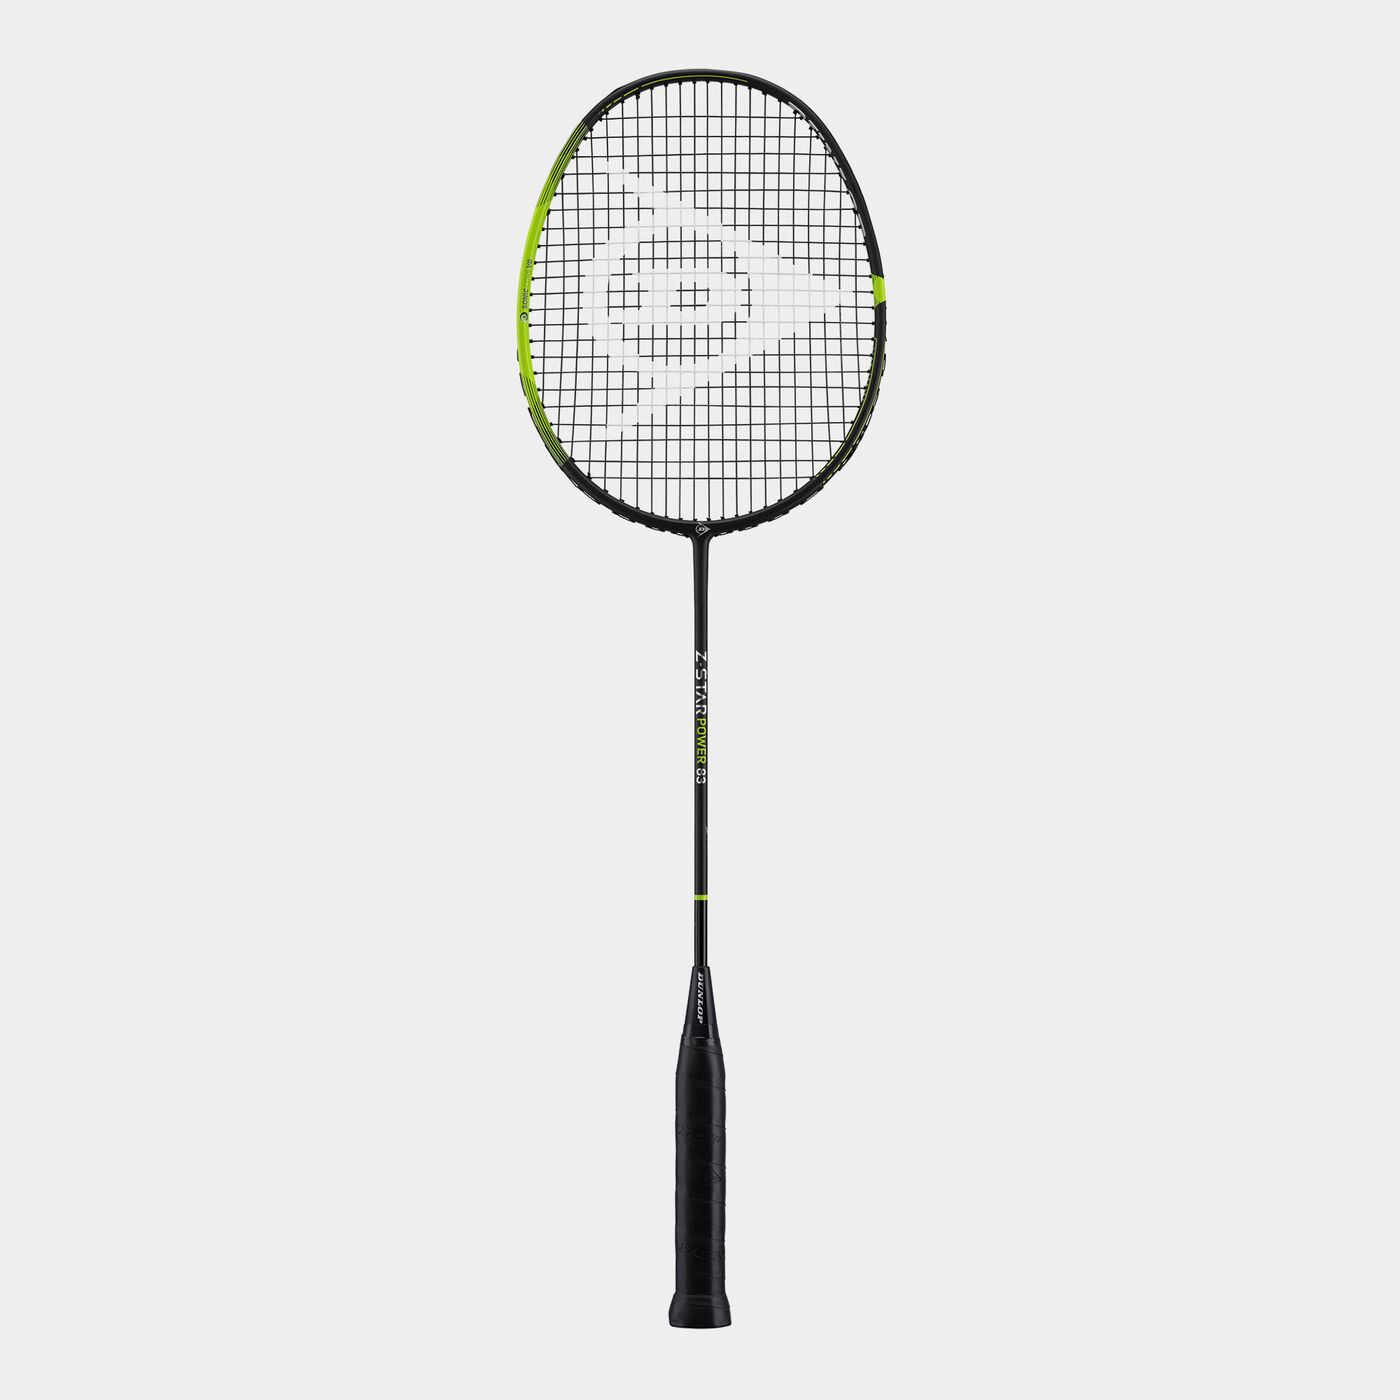 Z-Star Power 83 G6 Badminton Racket